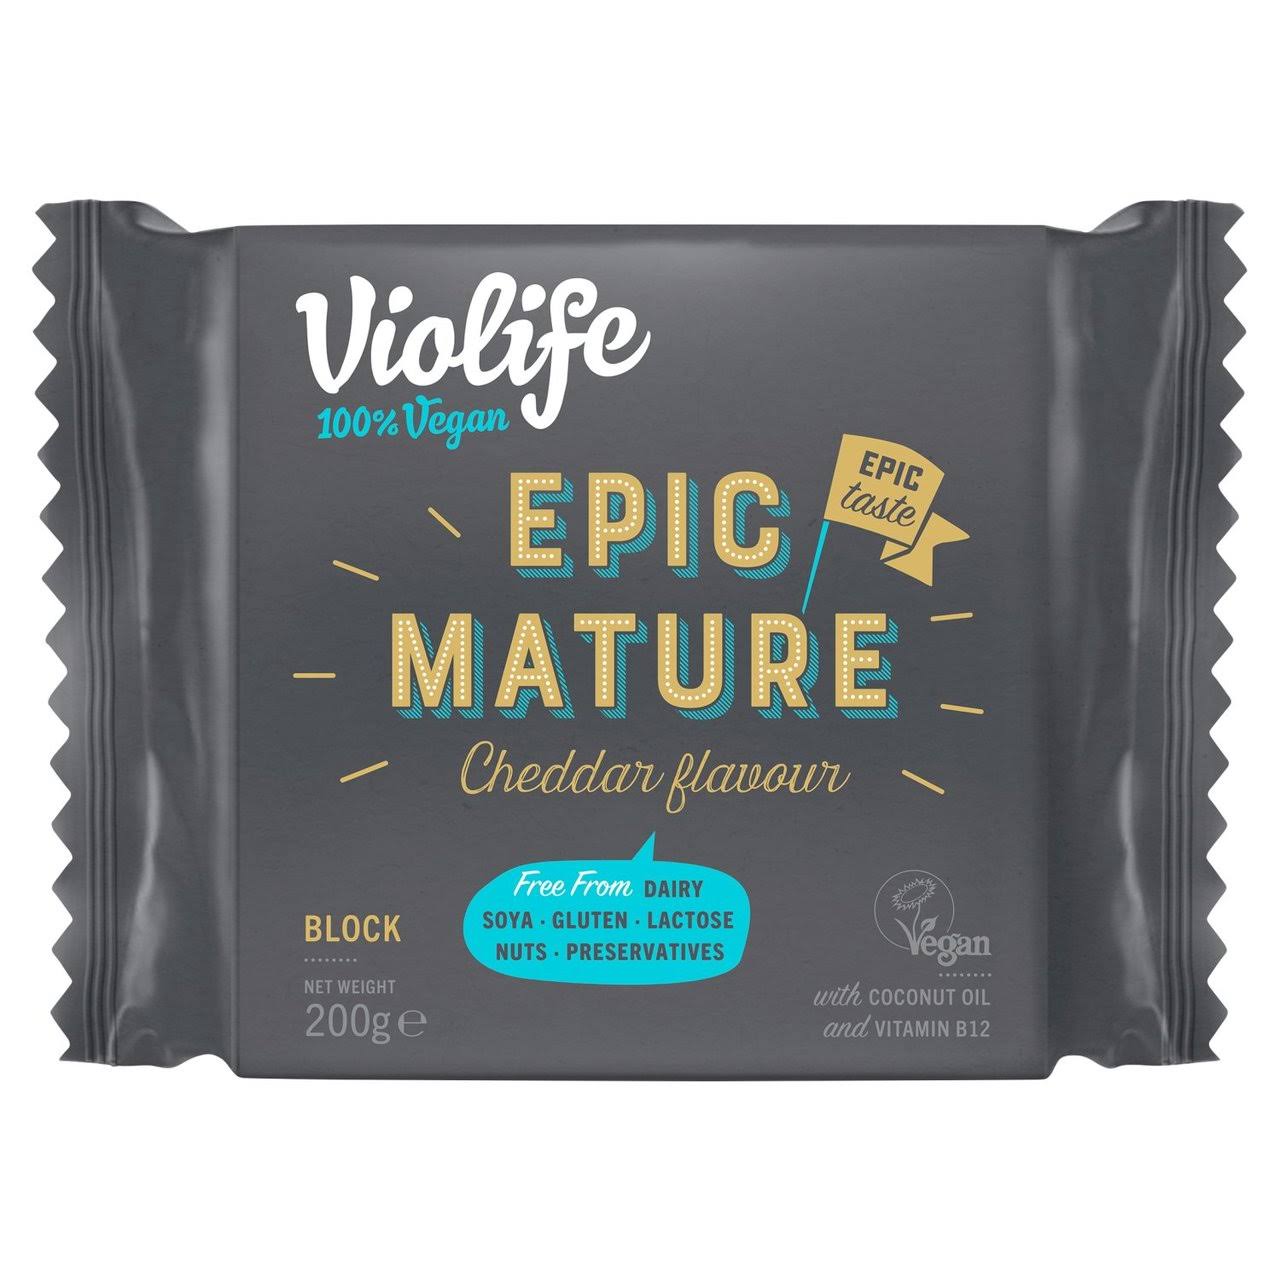 Violife Epic Mature Cheddar Cheese - 200g, Block